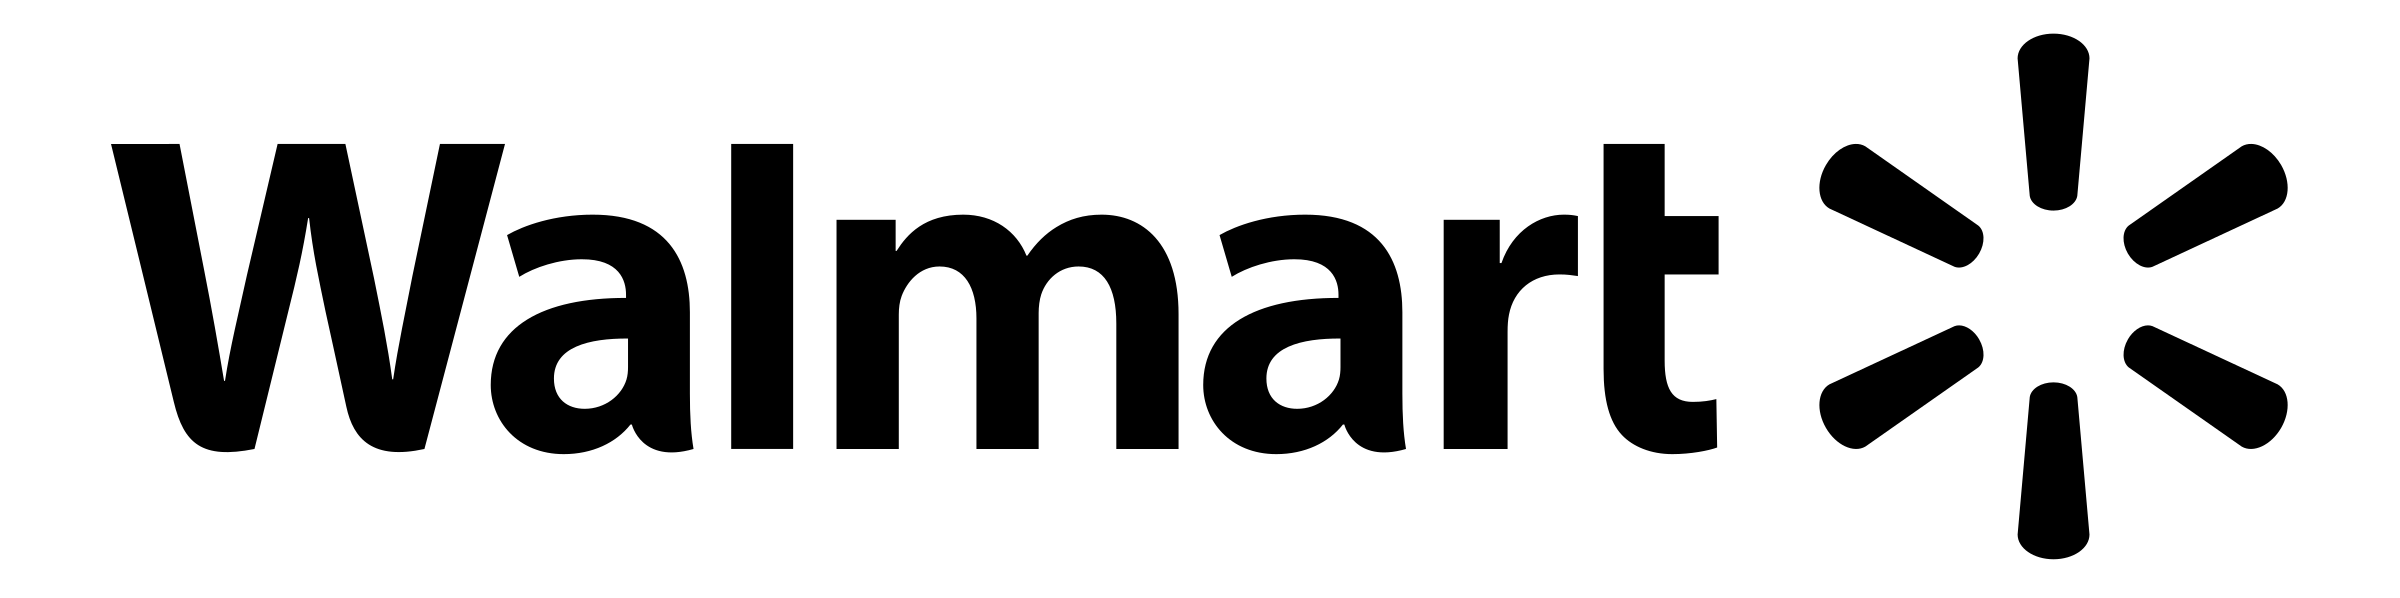 walmart-logo-negro-transparente.png